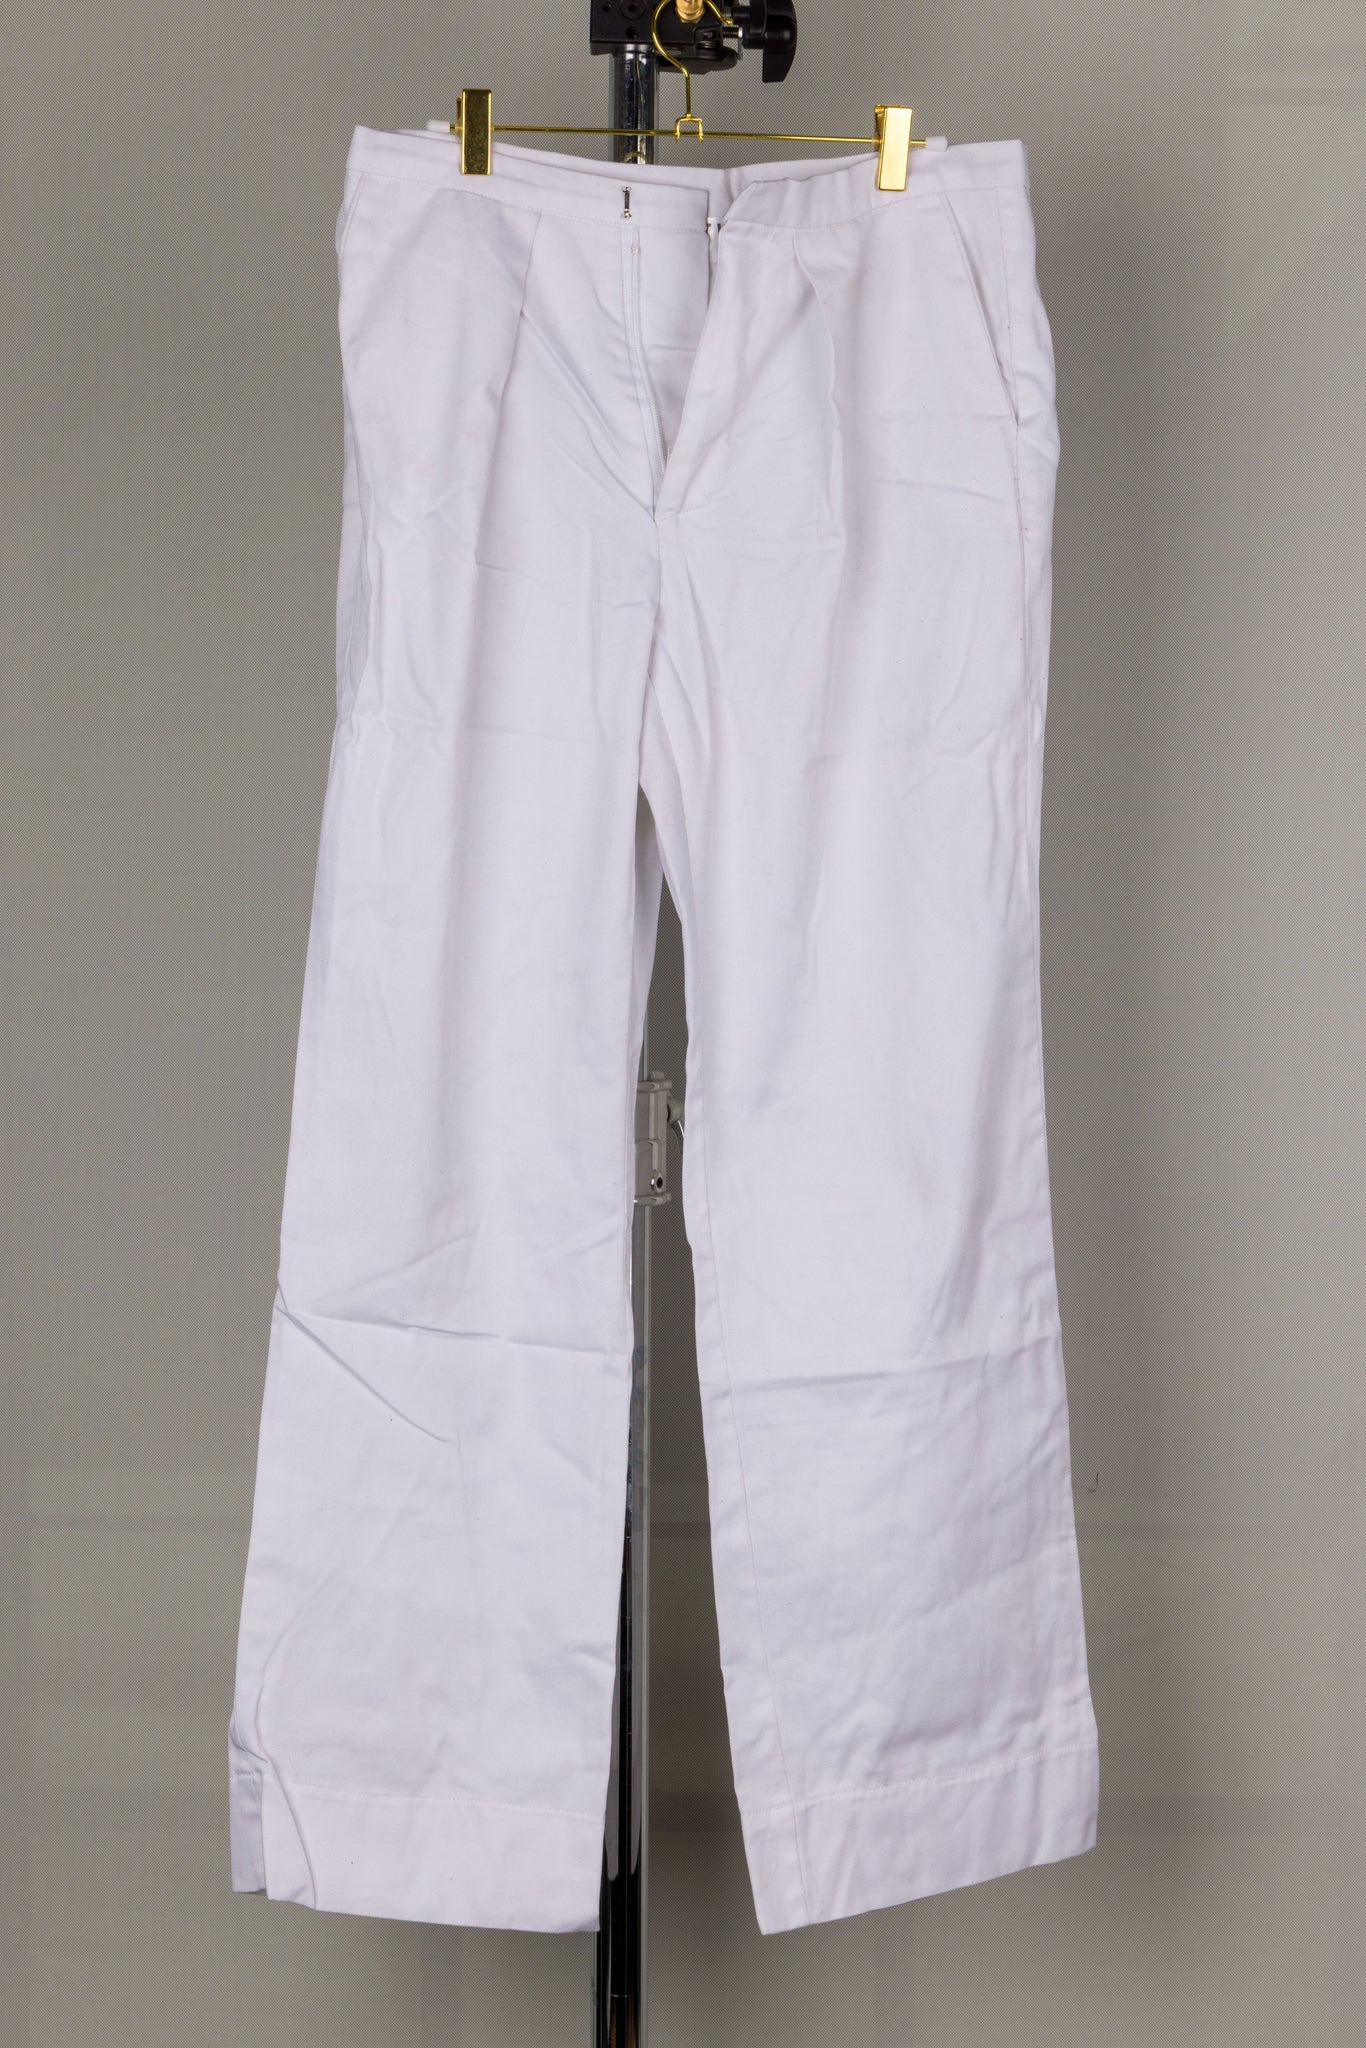 SAMPLE - Straight Simple Pants in S